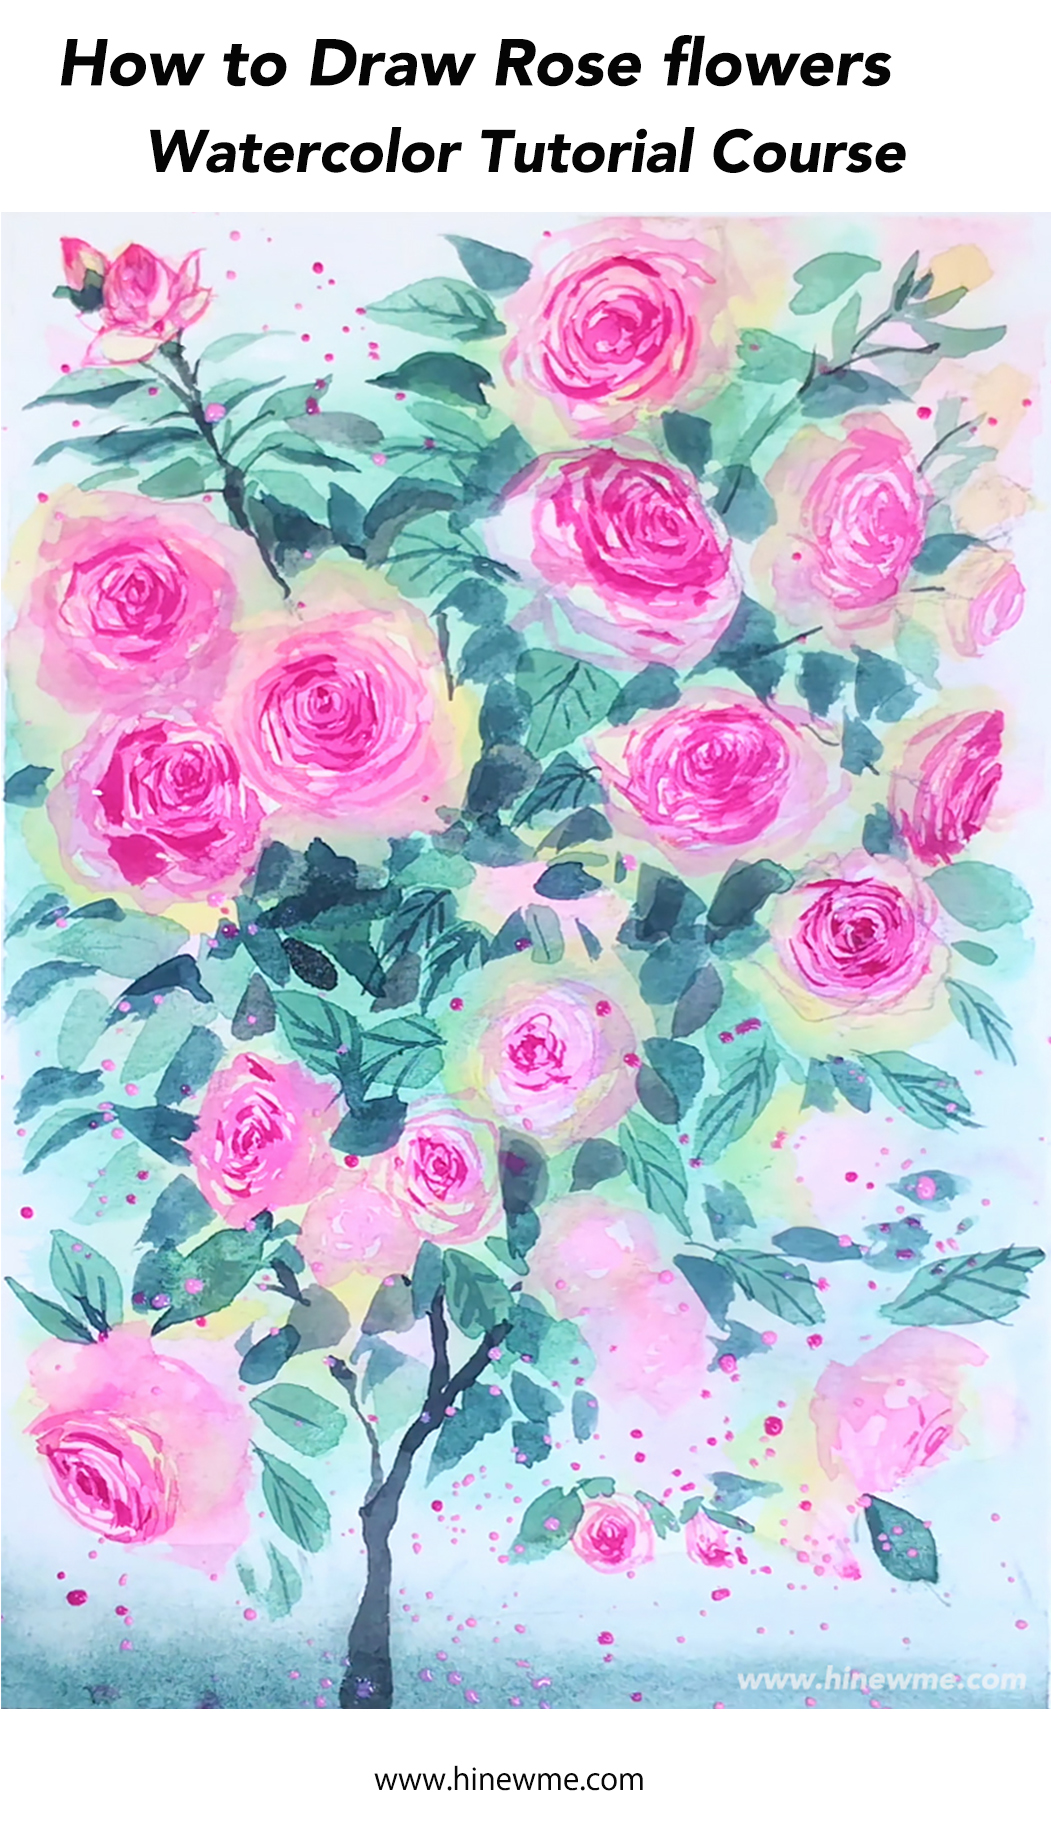 Watercolor rose flowers tutorial step by step for beginner - HiArt